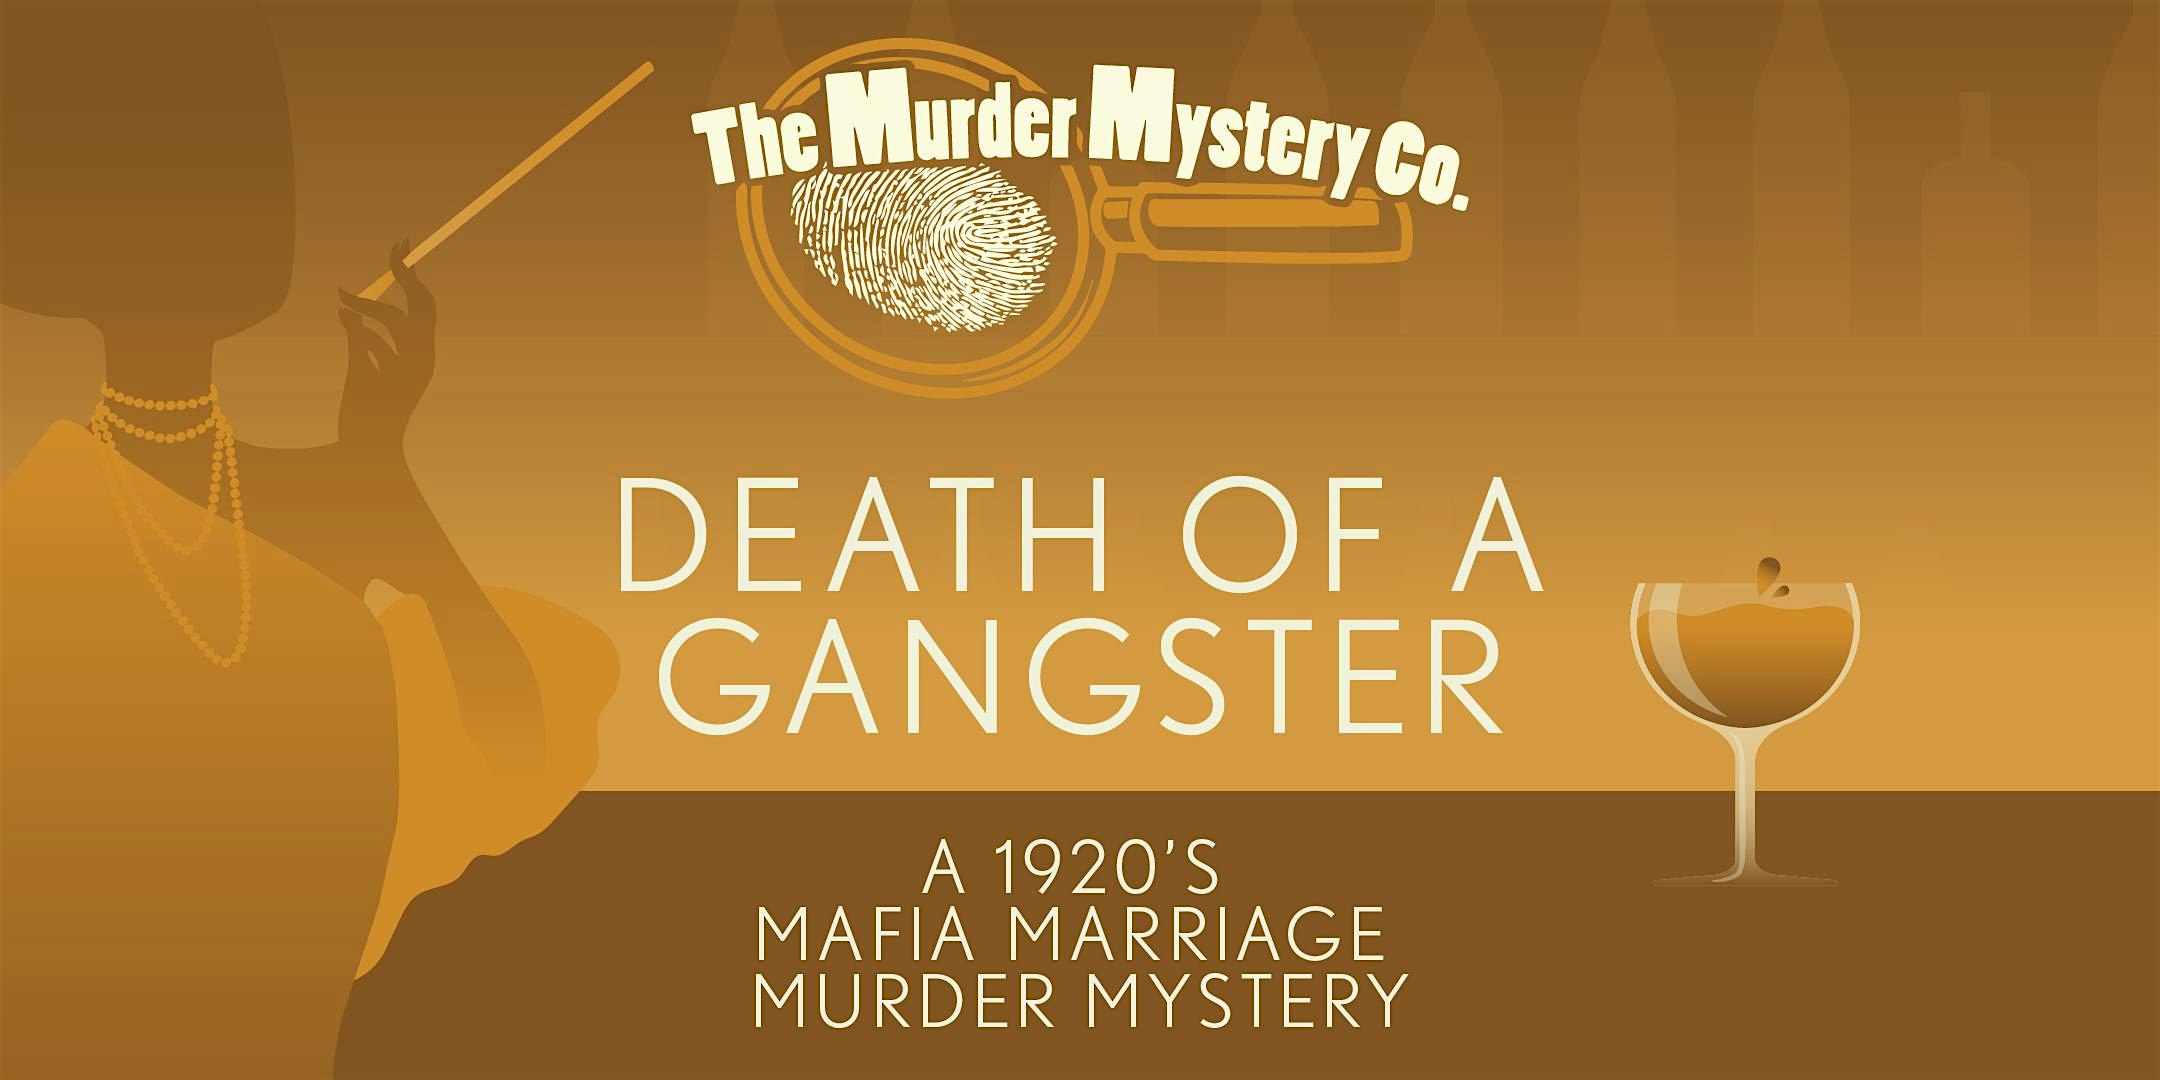 Murder Mystery Dinner Theater Show in Kansas City: Death of a Gangster